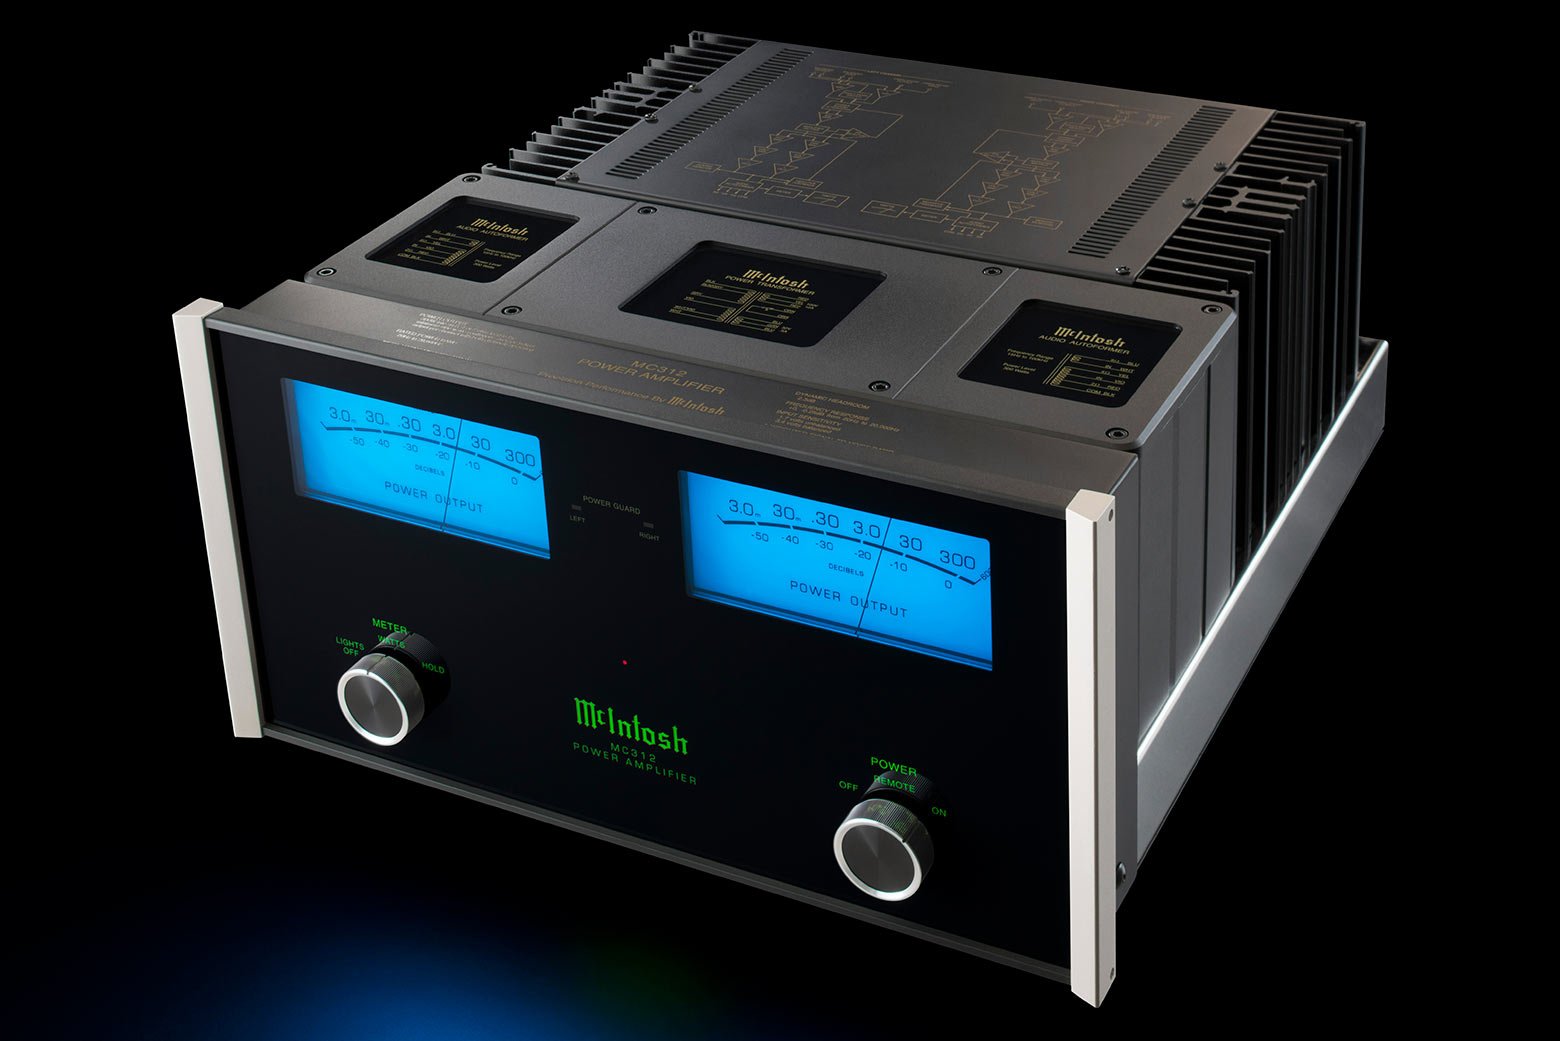 McIntosh MC312 Stereo Amplifier